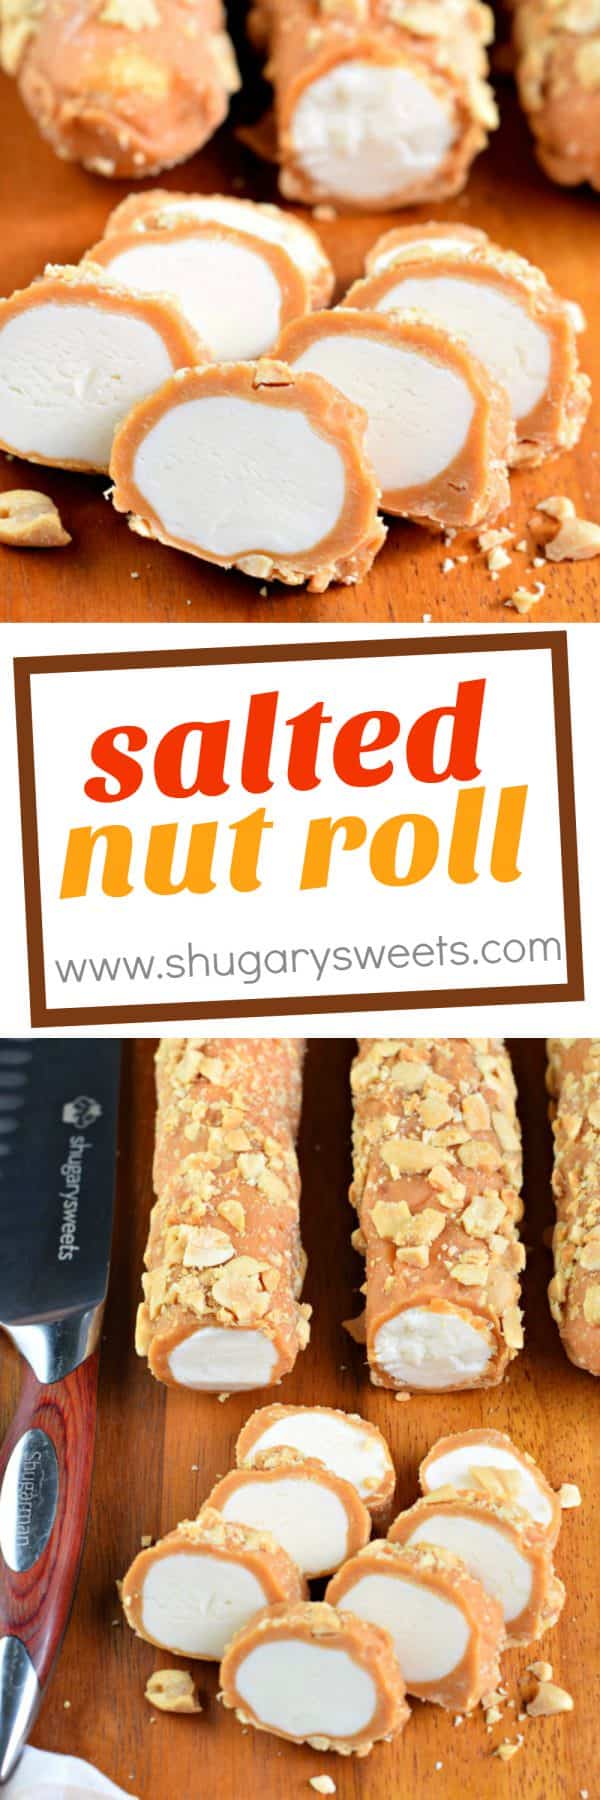 Nut Dessert Recipes: Salted Nut Roll